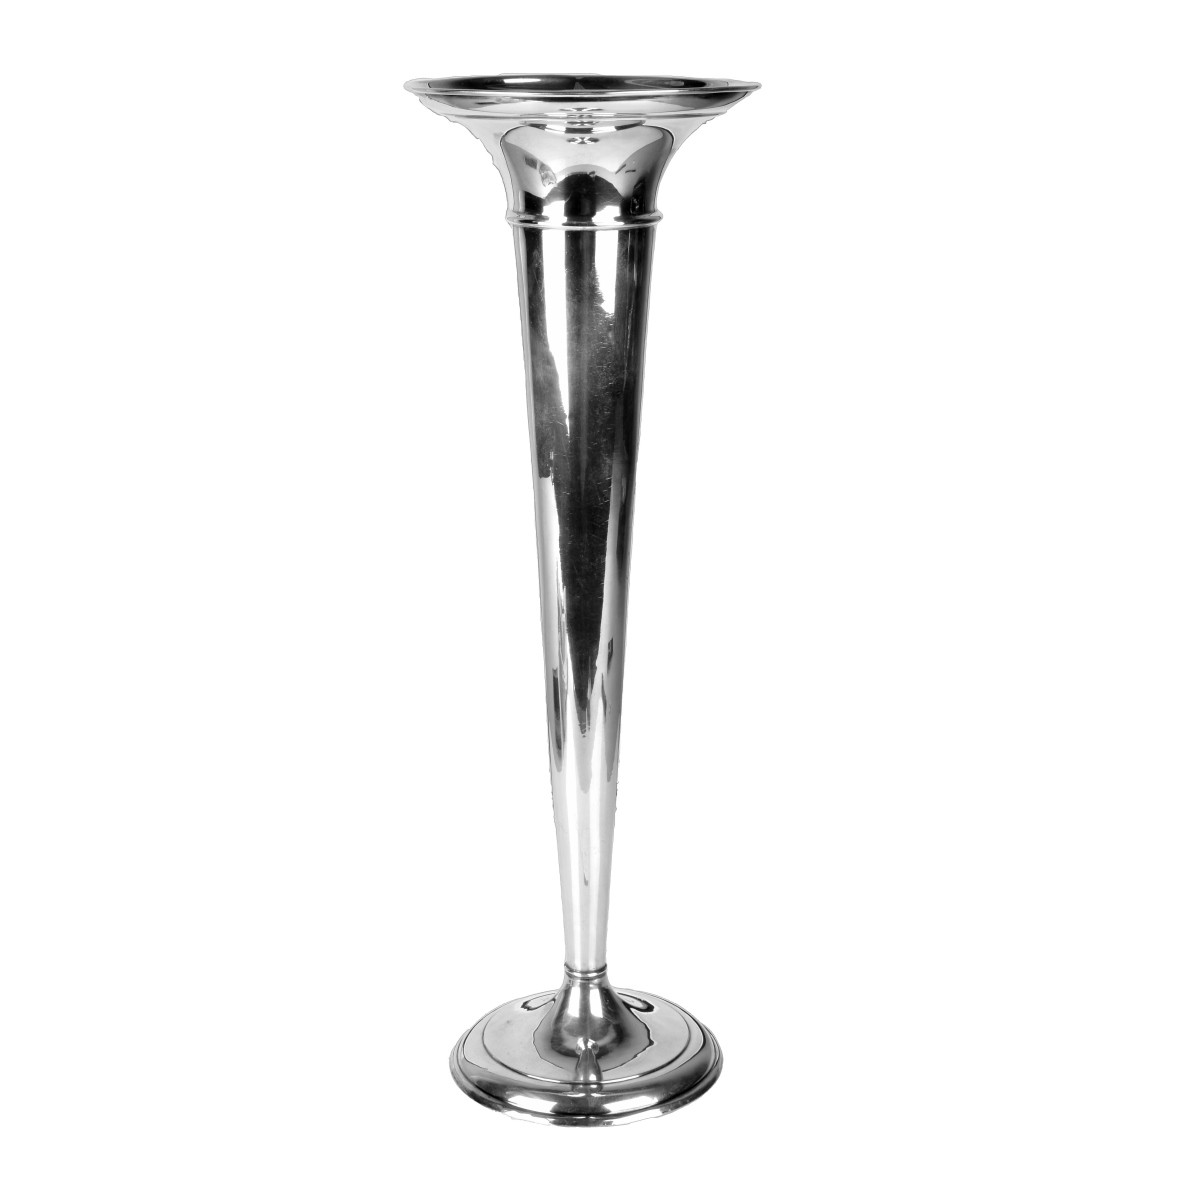 LaPierre Manufacturing Co. Trumpet Vase